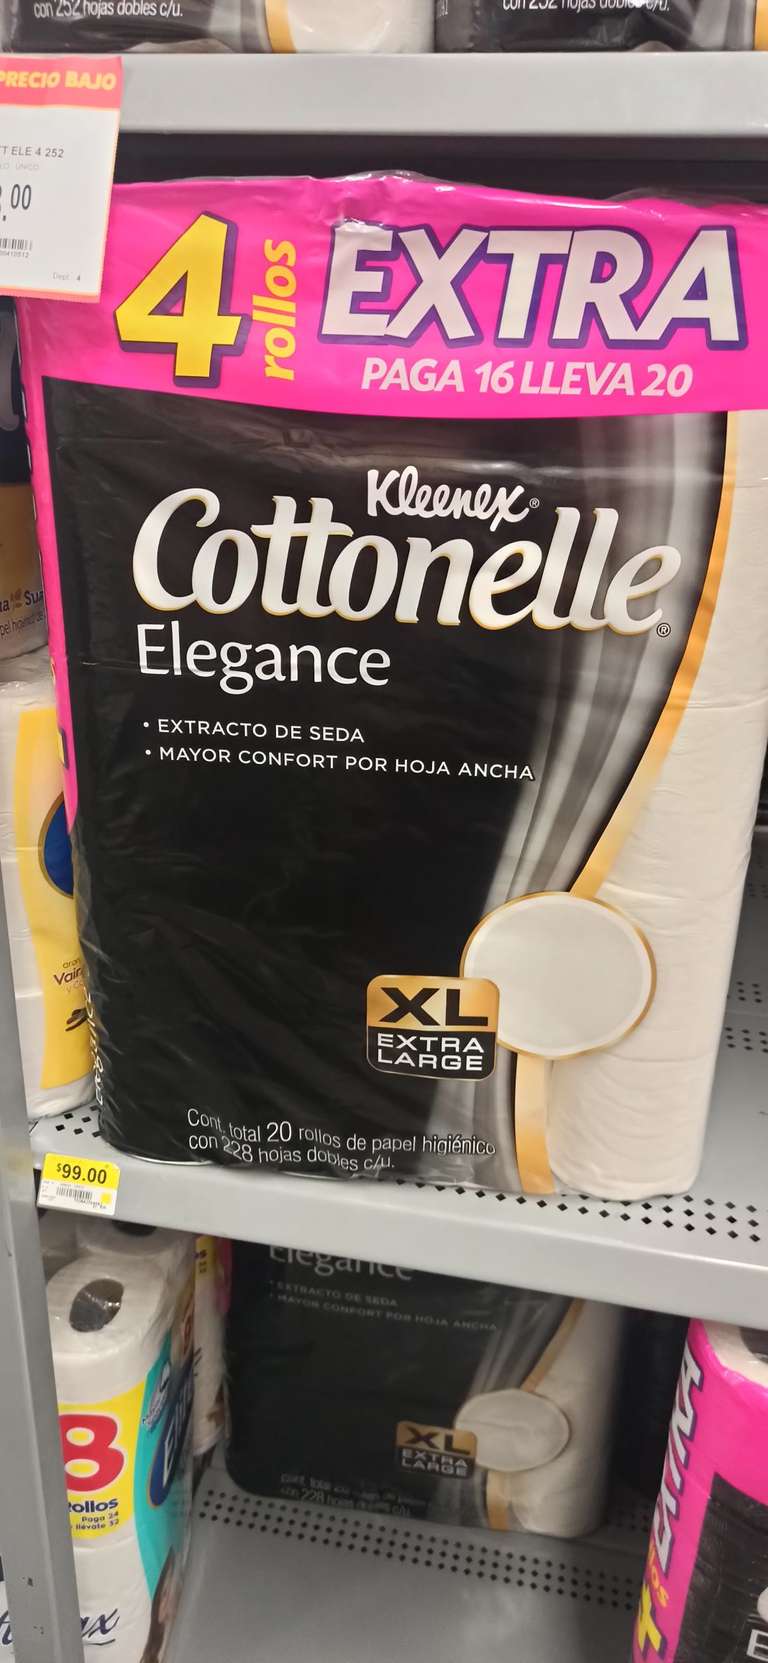 Kleenex cotonelle elegance Walmart averanda cuernavaca